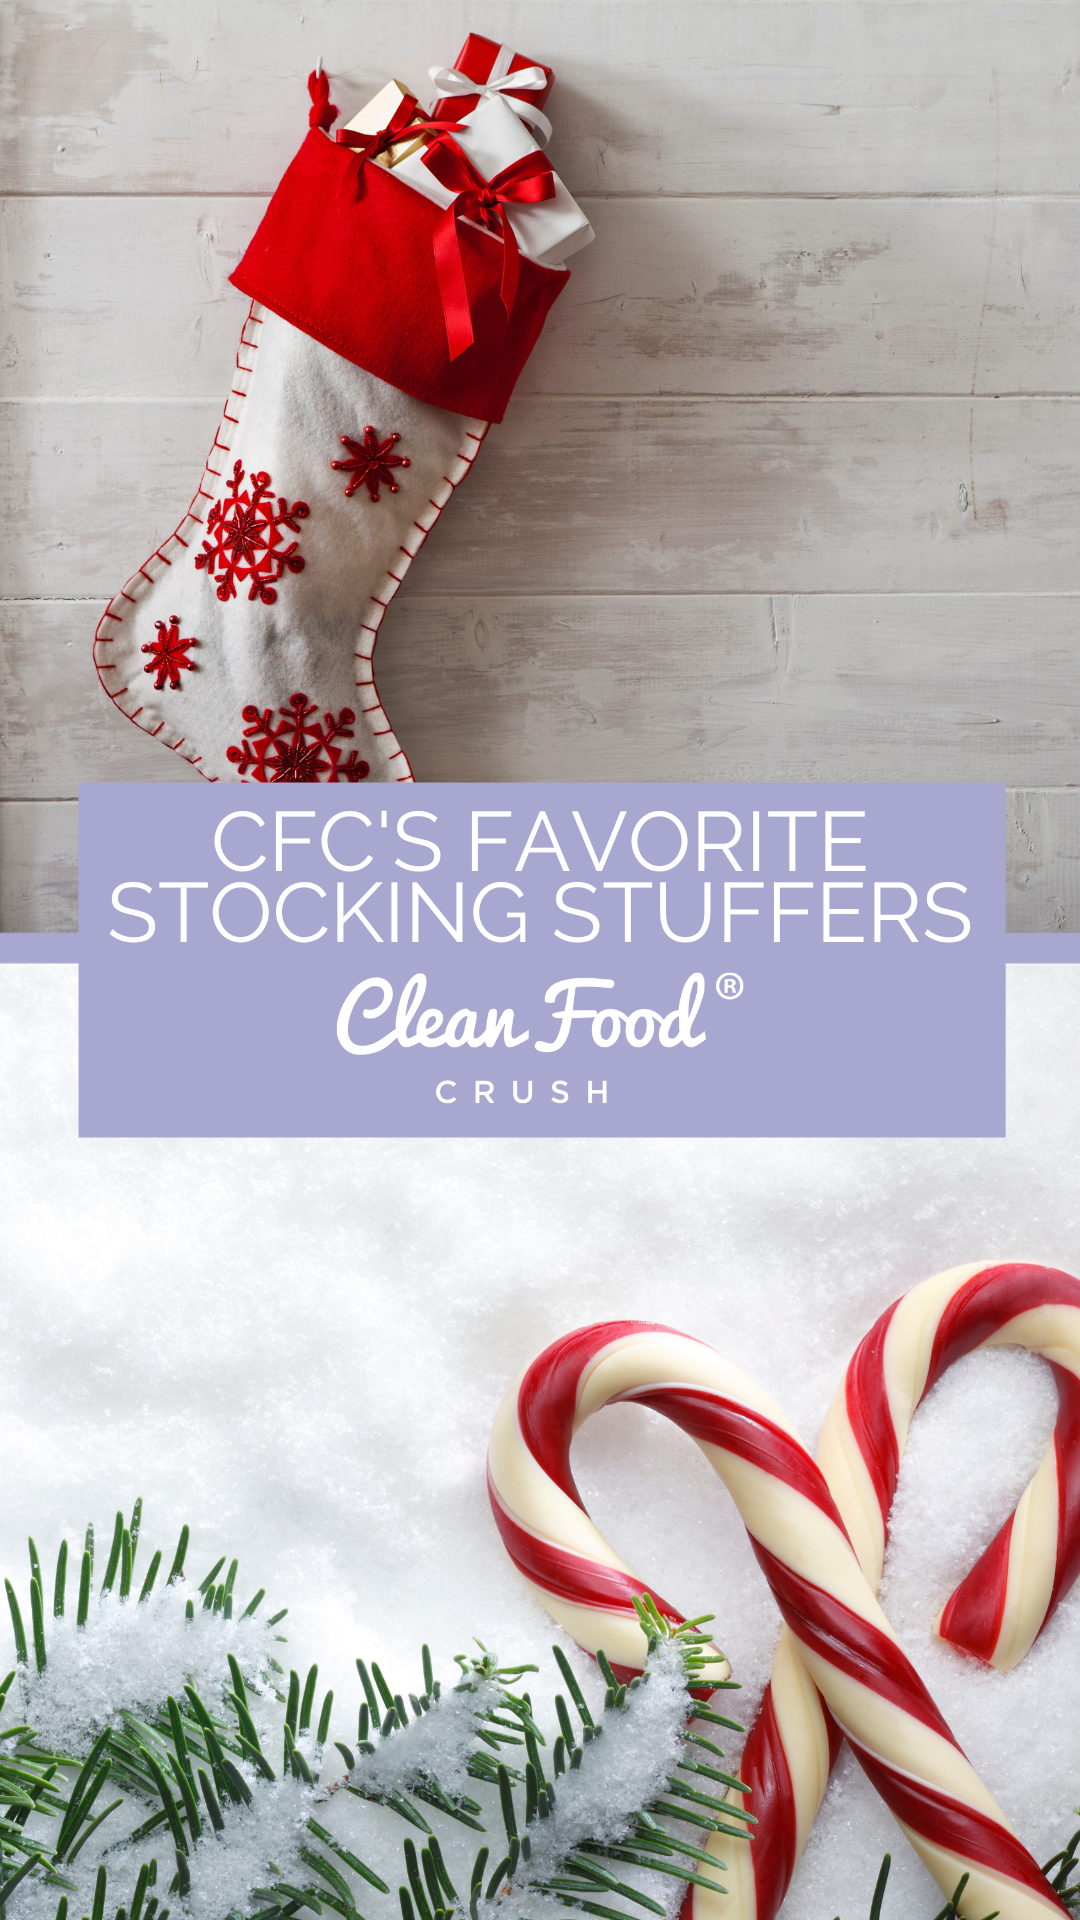 https://cleanfoodcrush.com/wp-content/uploads/2022/12/cfc-favorite-stocking-stuffers.png